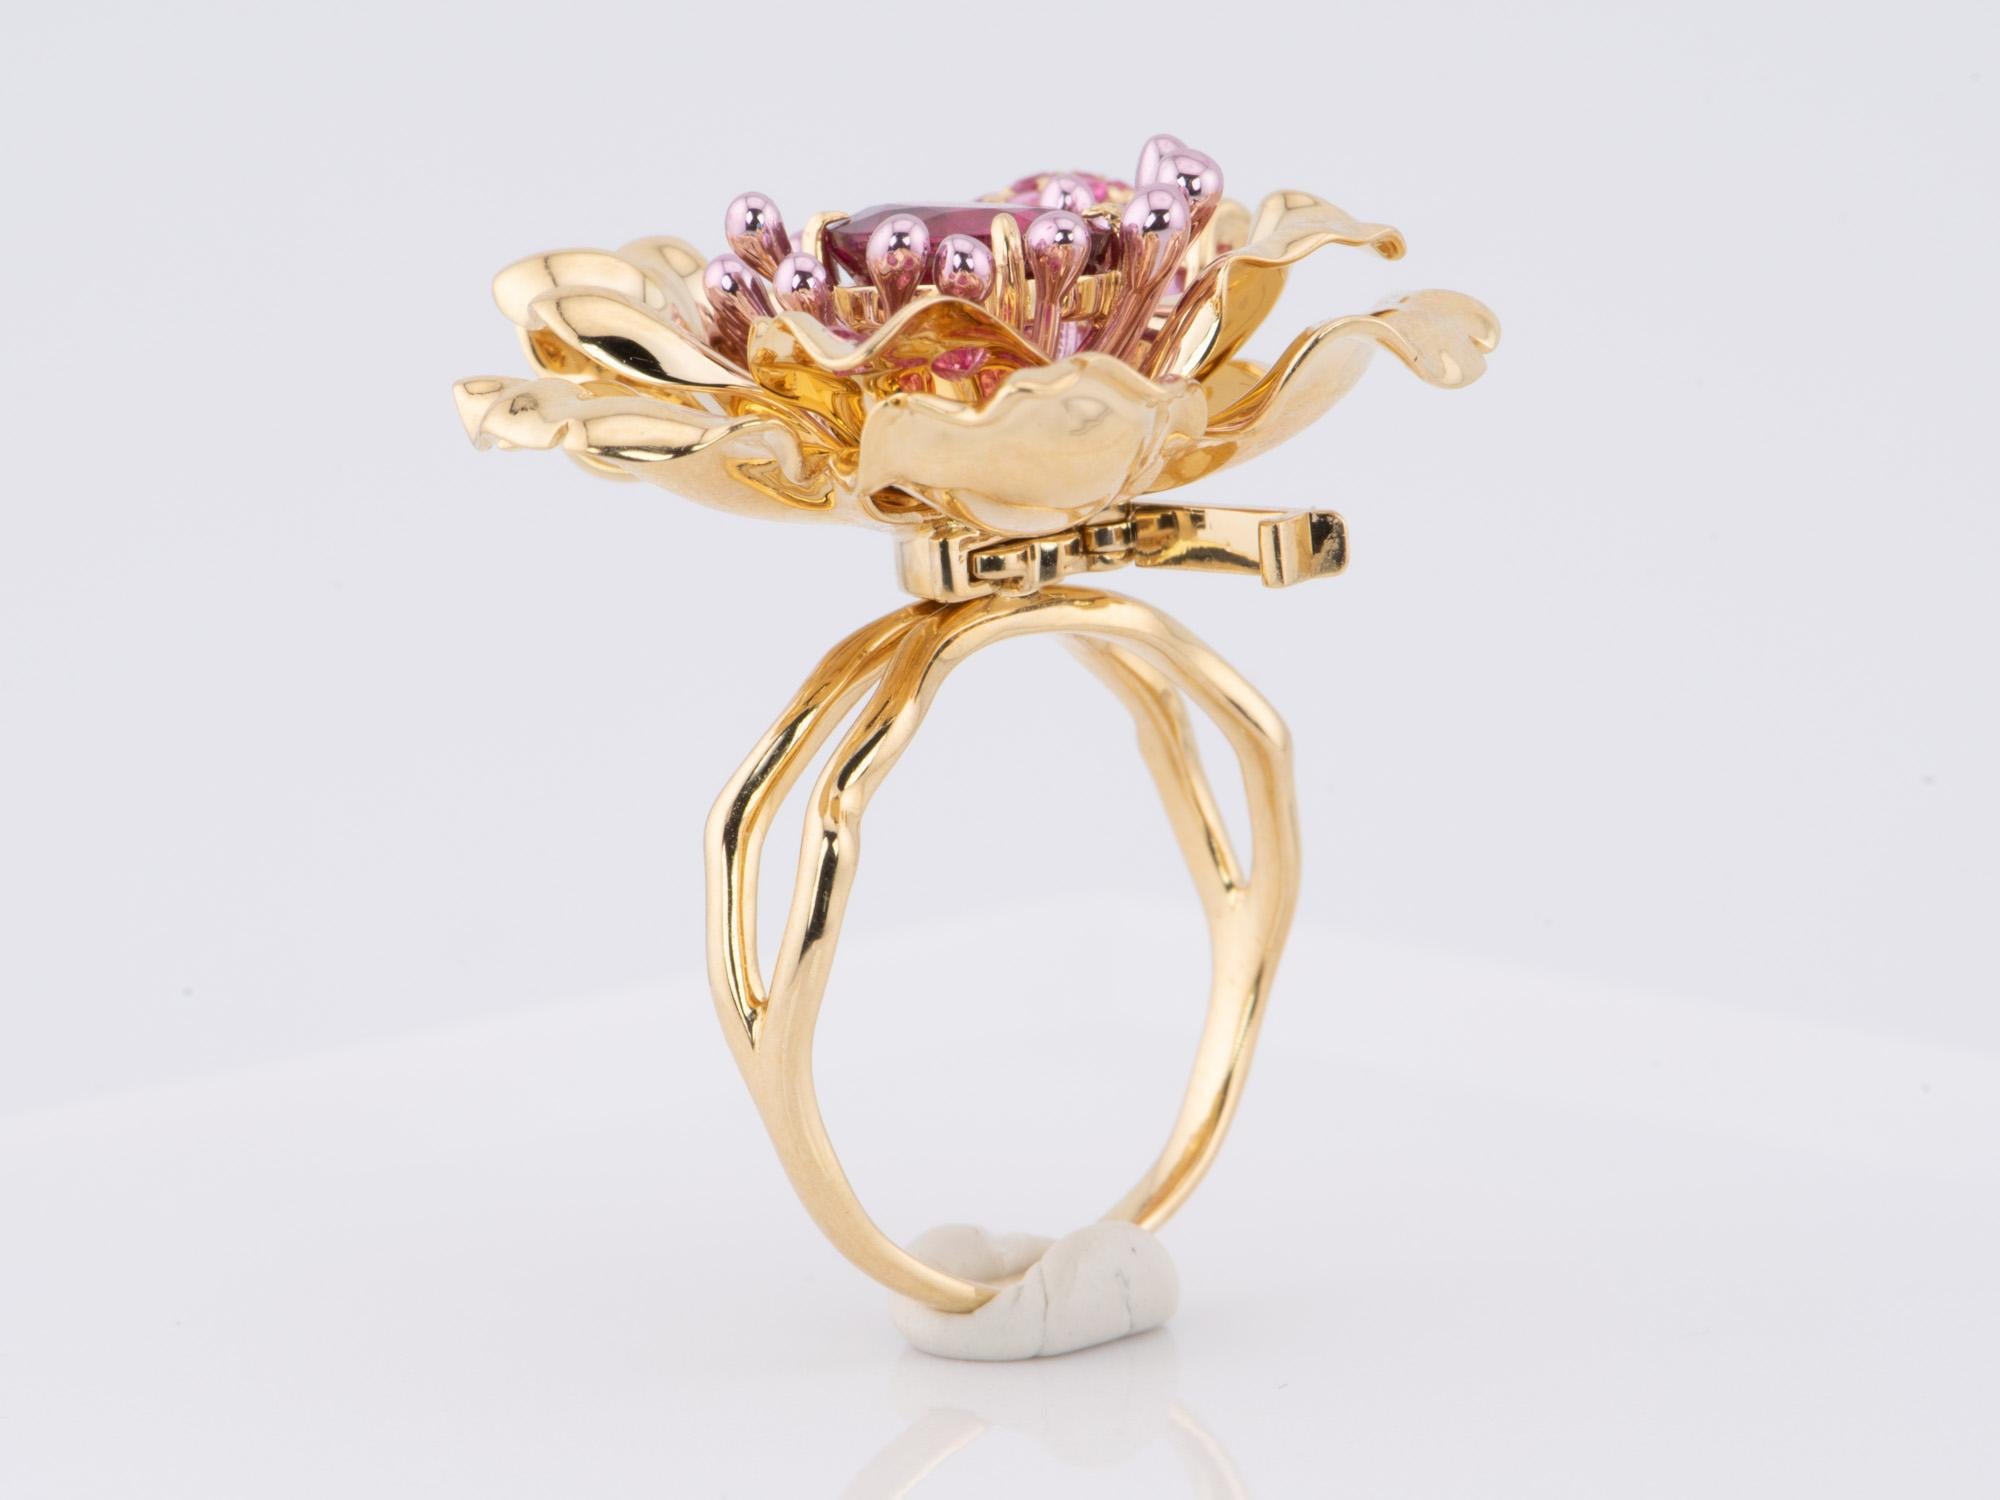 Art Jewelry Rubellite Tourmaline Center Flower Ring / Pendant 18K Gold R6641 For Sale 6